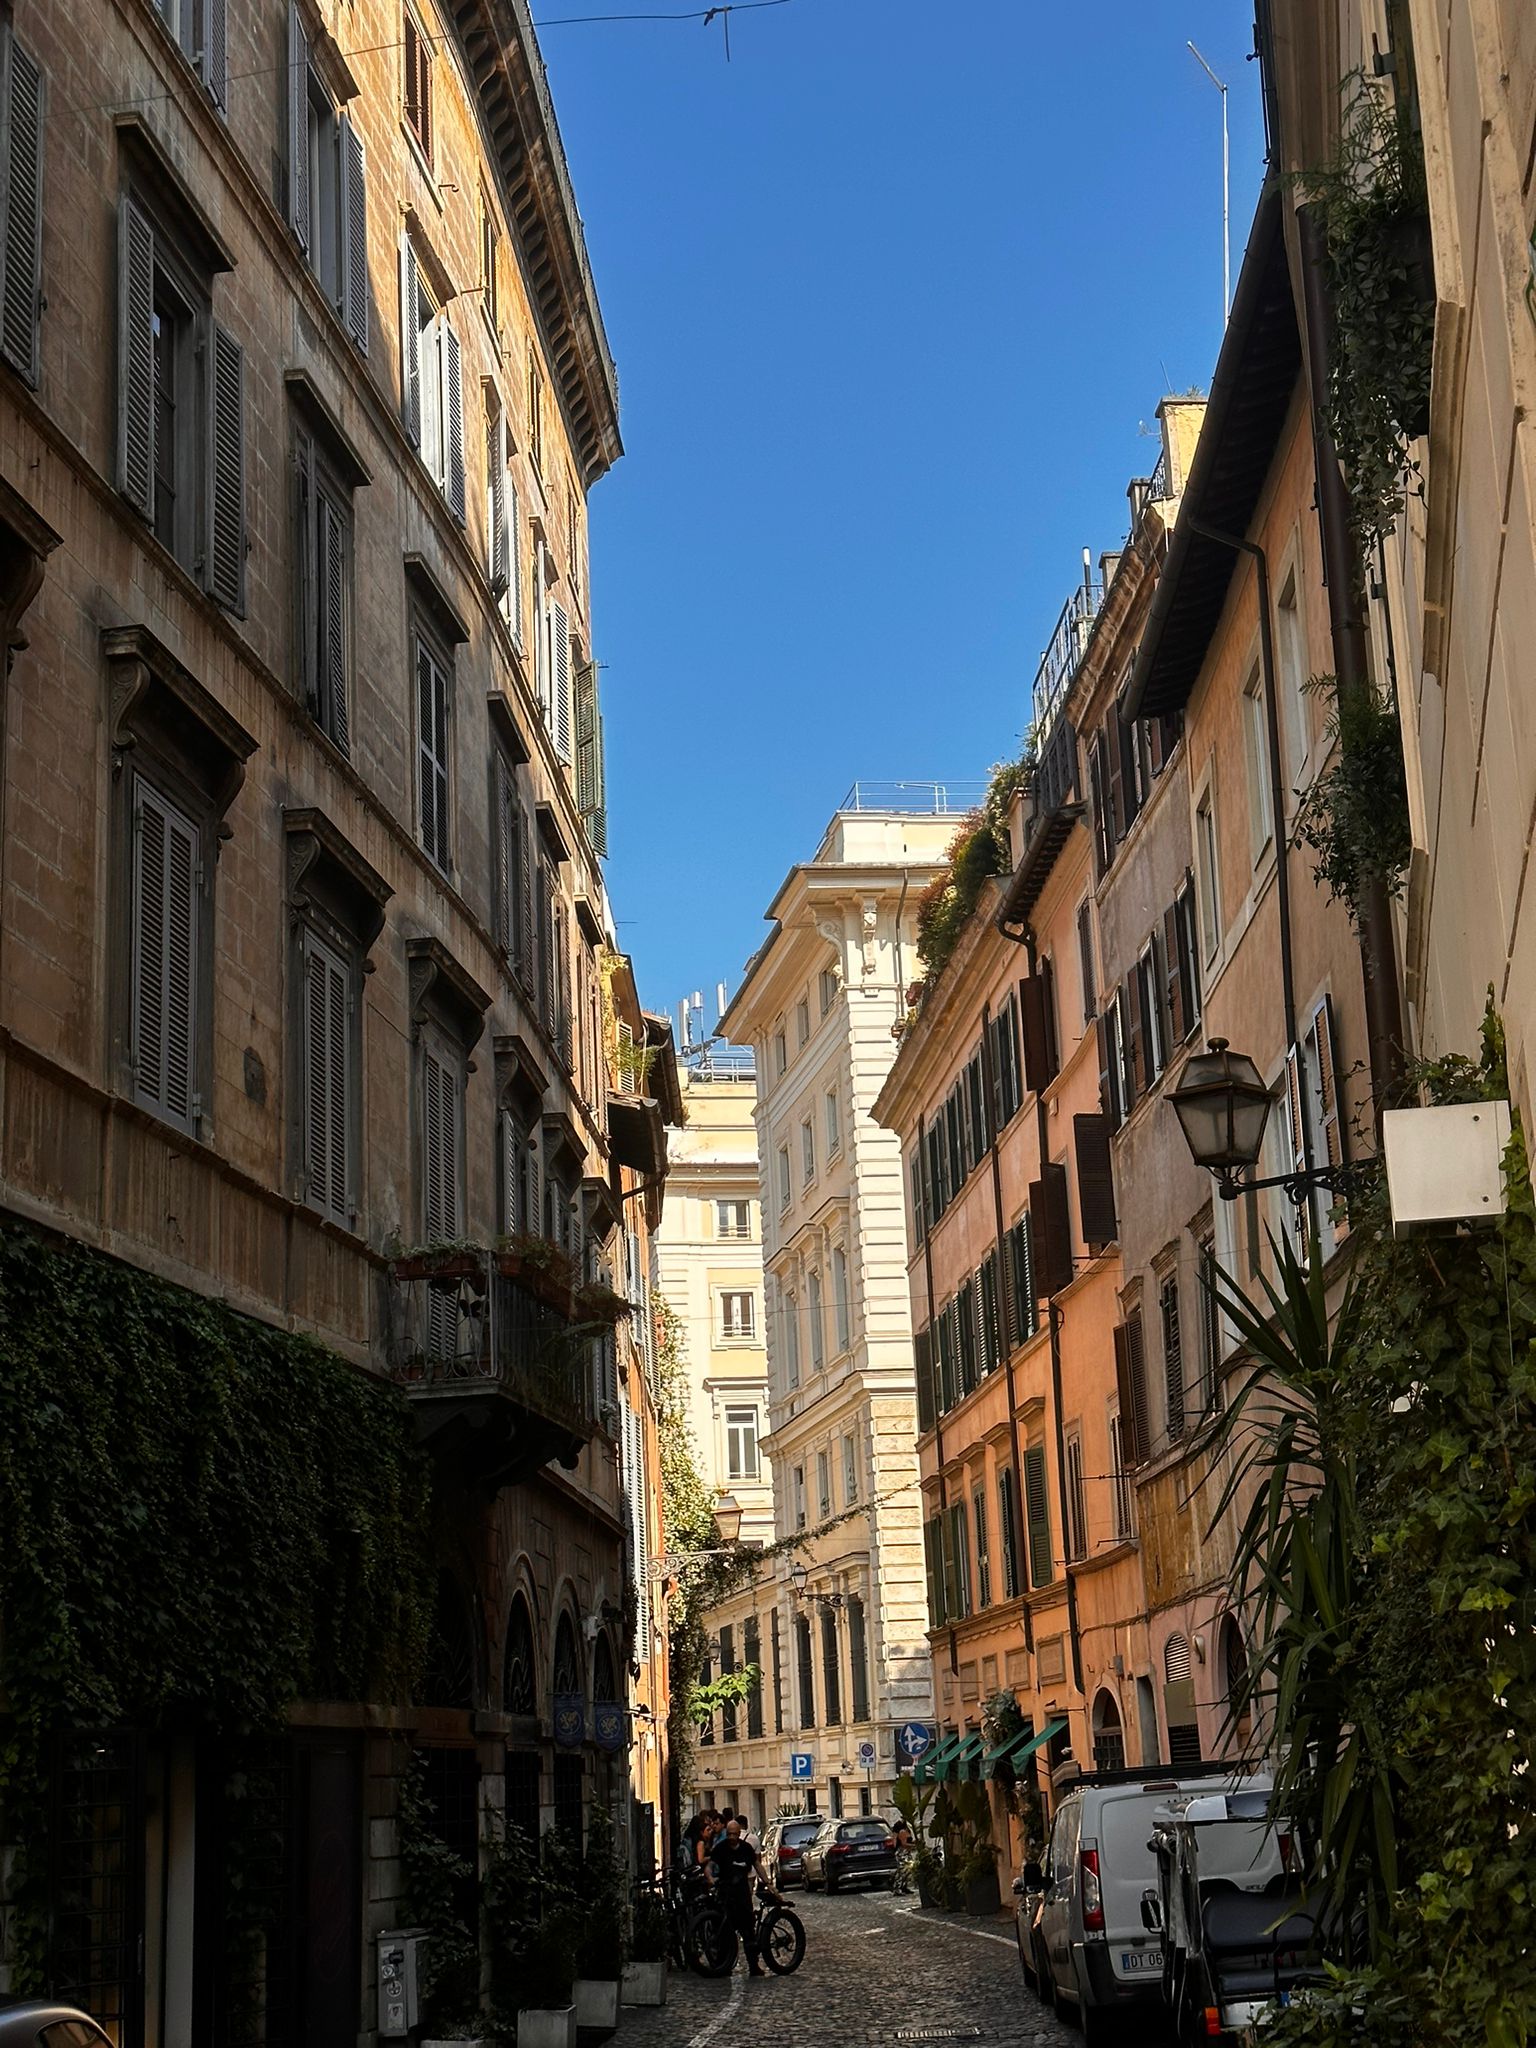 Mercedes Limo Van Tour Through Rome's Historic Streets